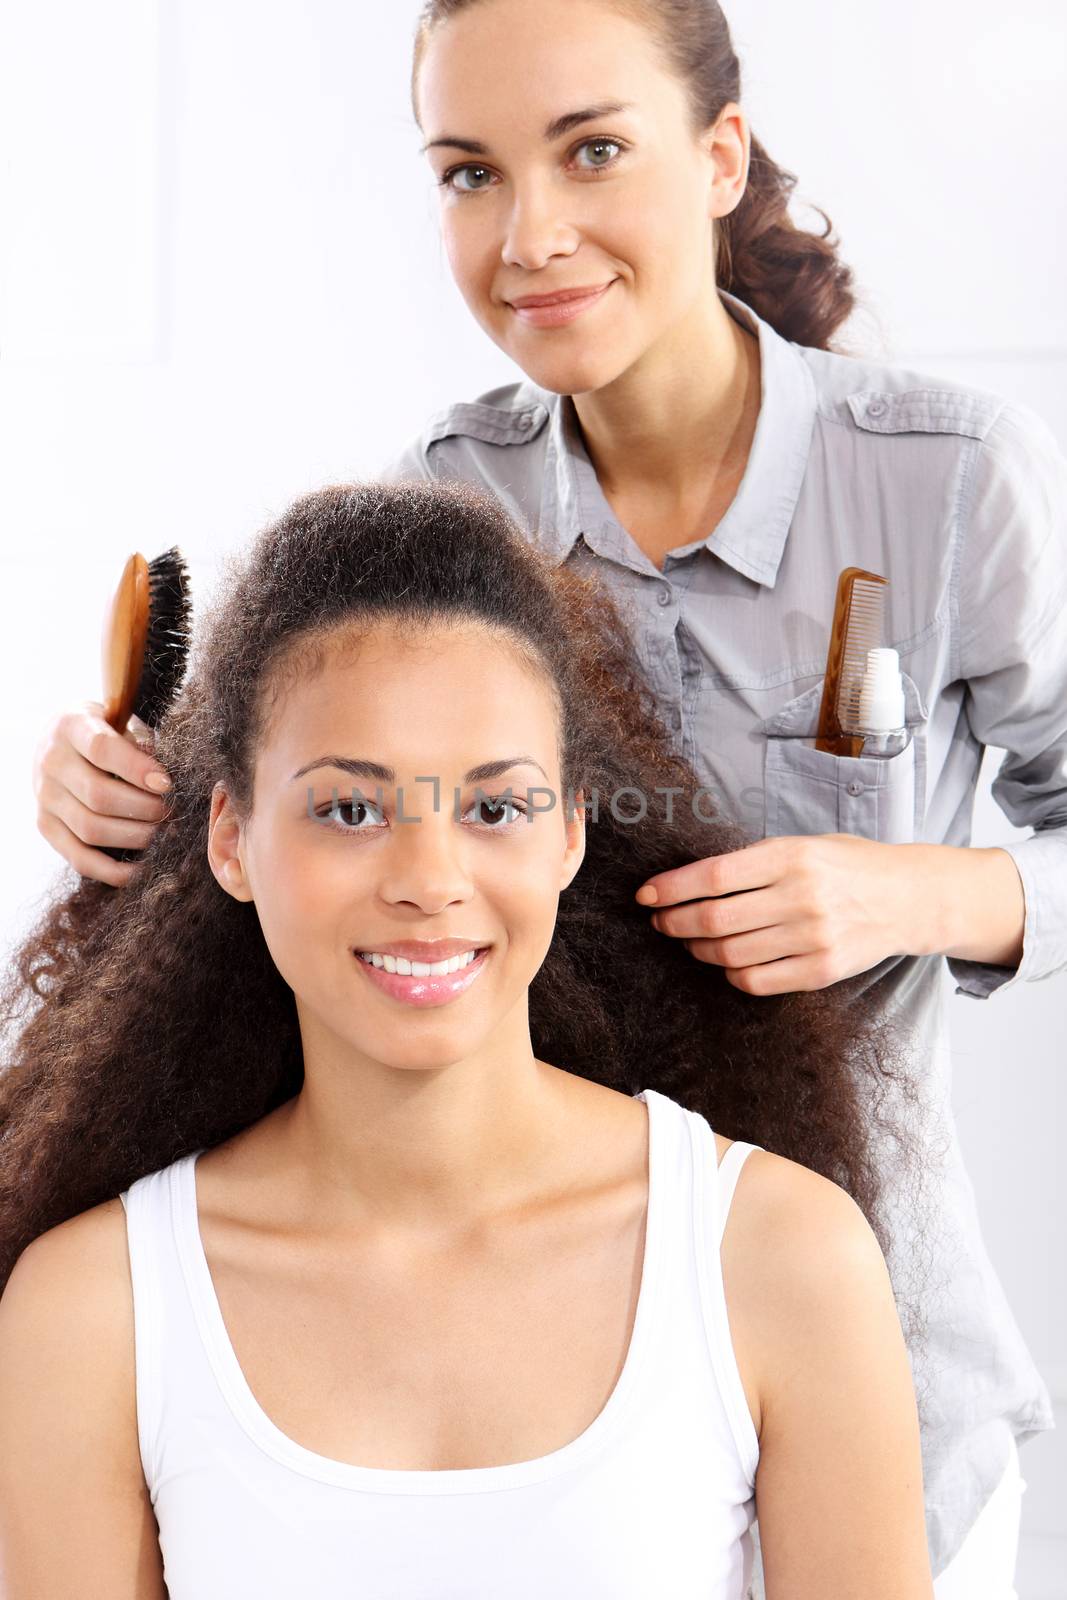 The dark-skinned woman in a hair salon